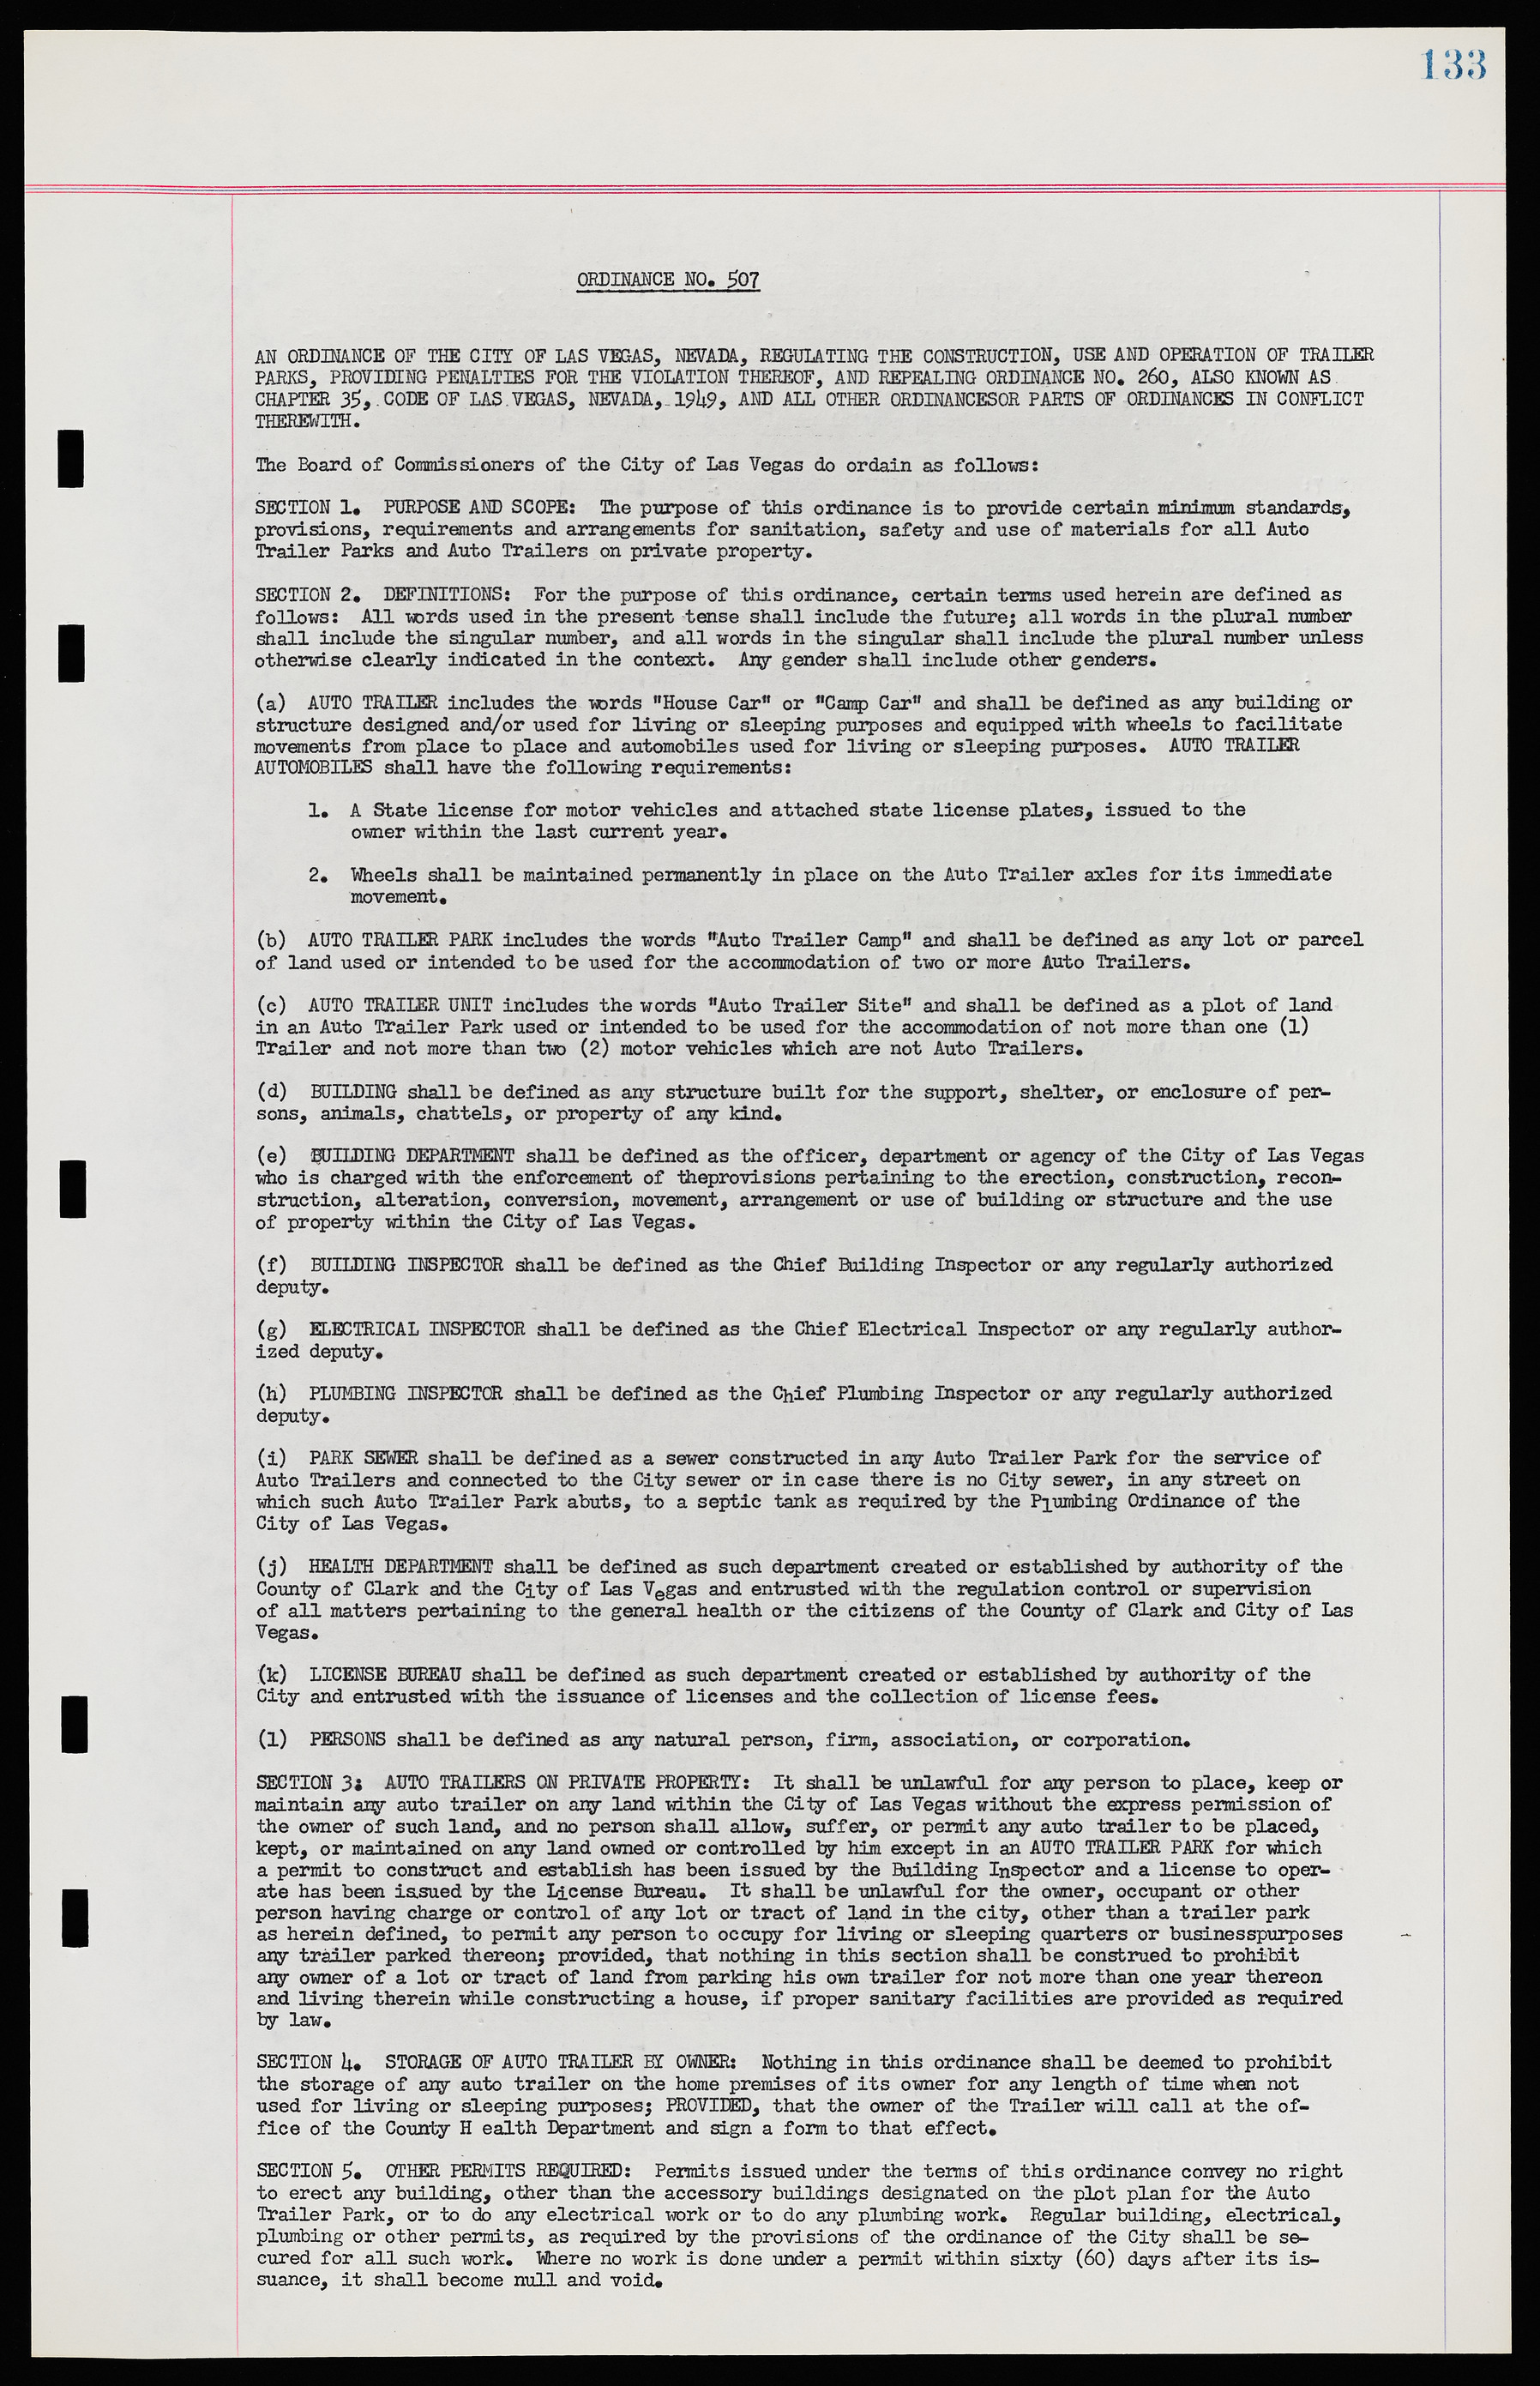 Las Vegas City Ordinances, November 13, 1950 to August 6, 1958, lvc000015-141